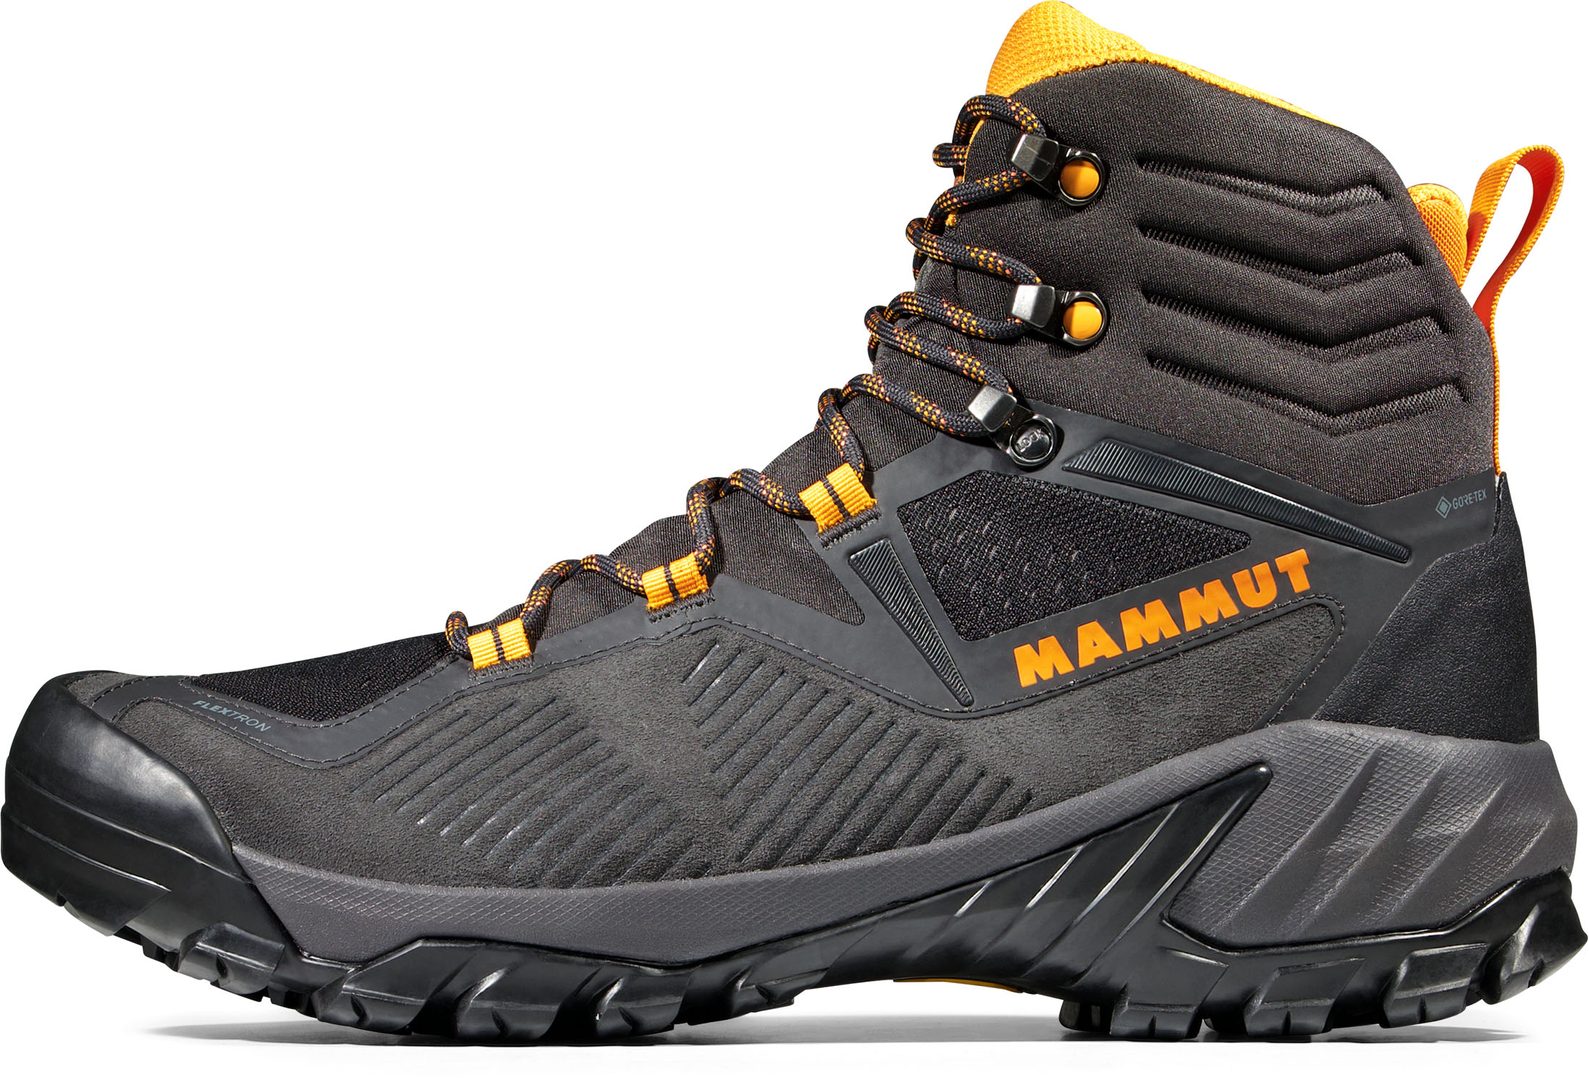 Hiking boot Mammut Sapuen High GTX (Dark sttel - neo mint) Women's